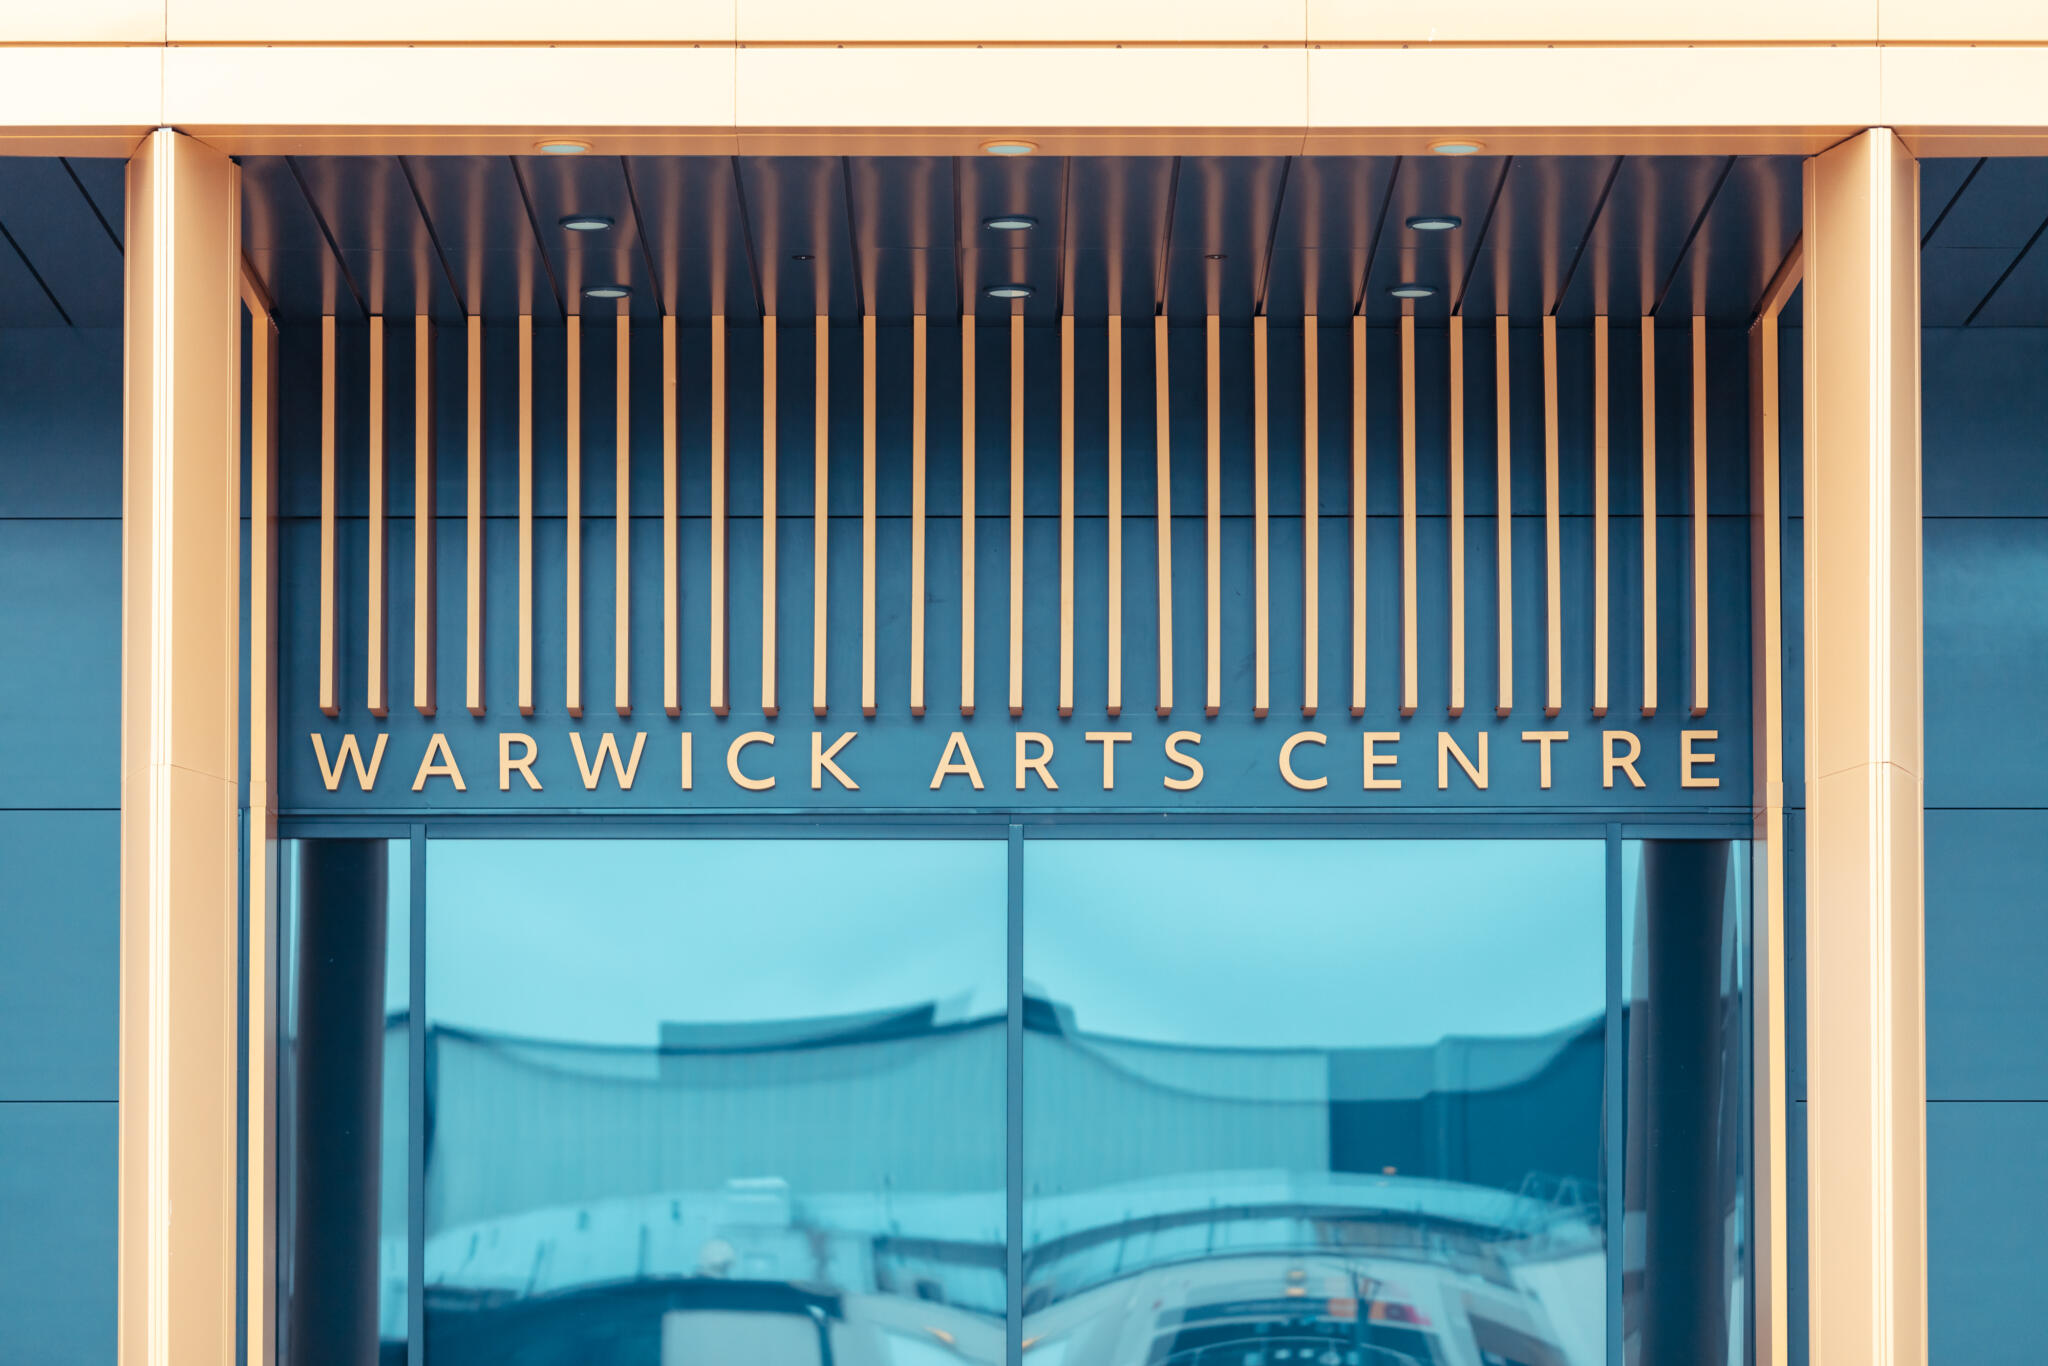 University of Warwick Arts Centre